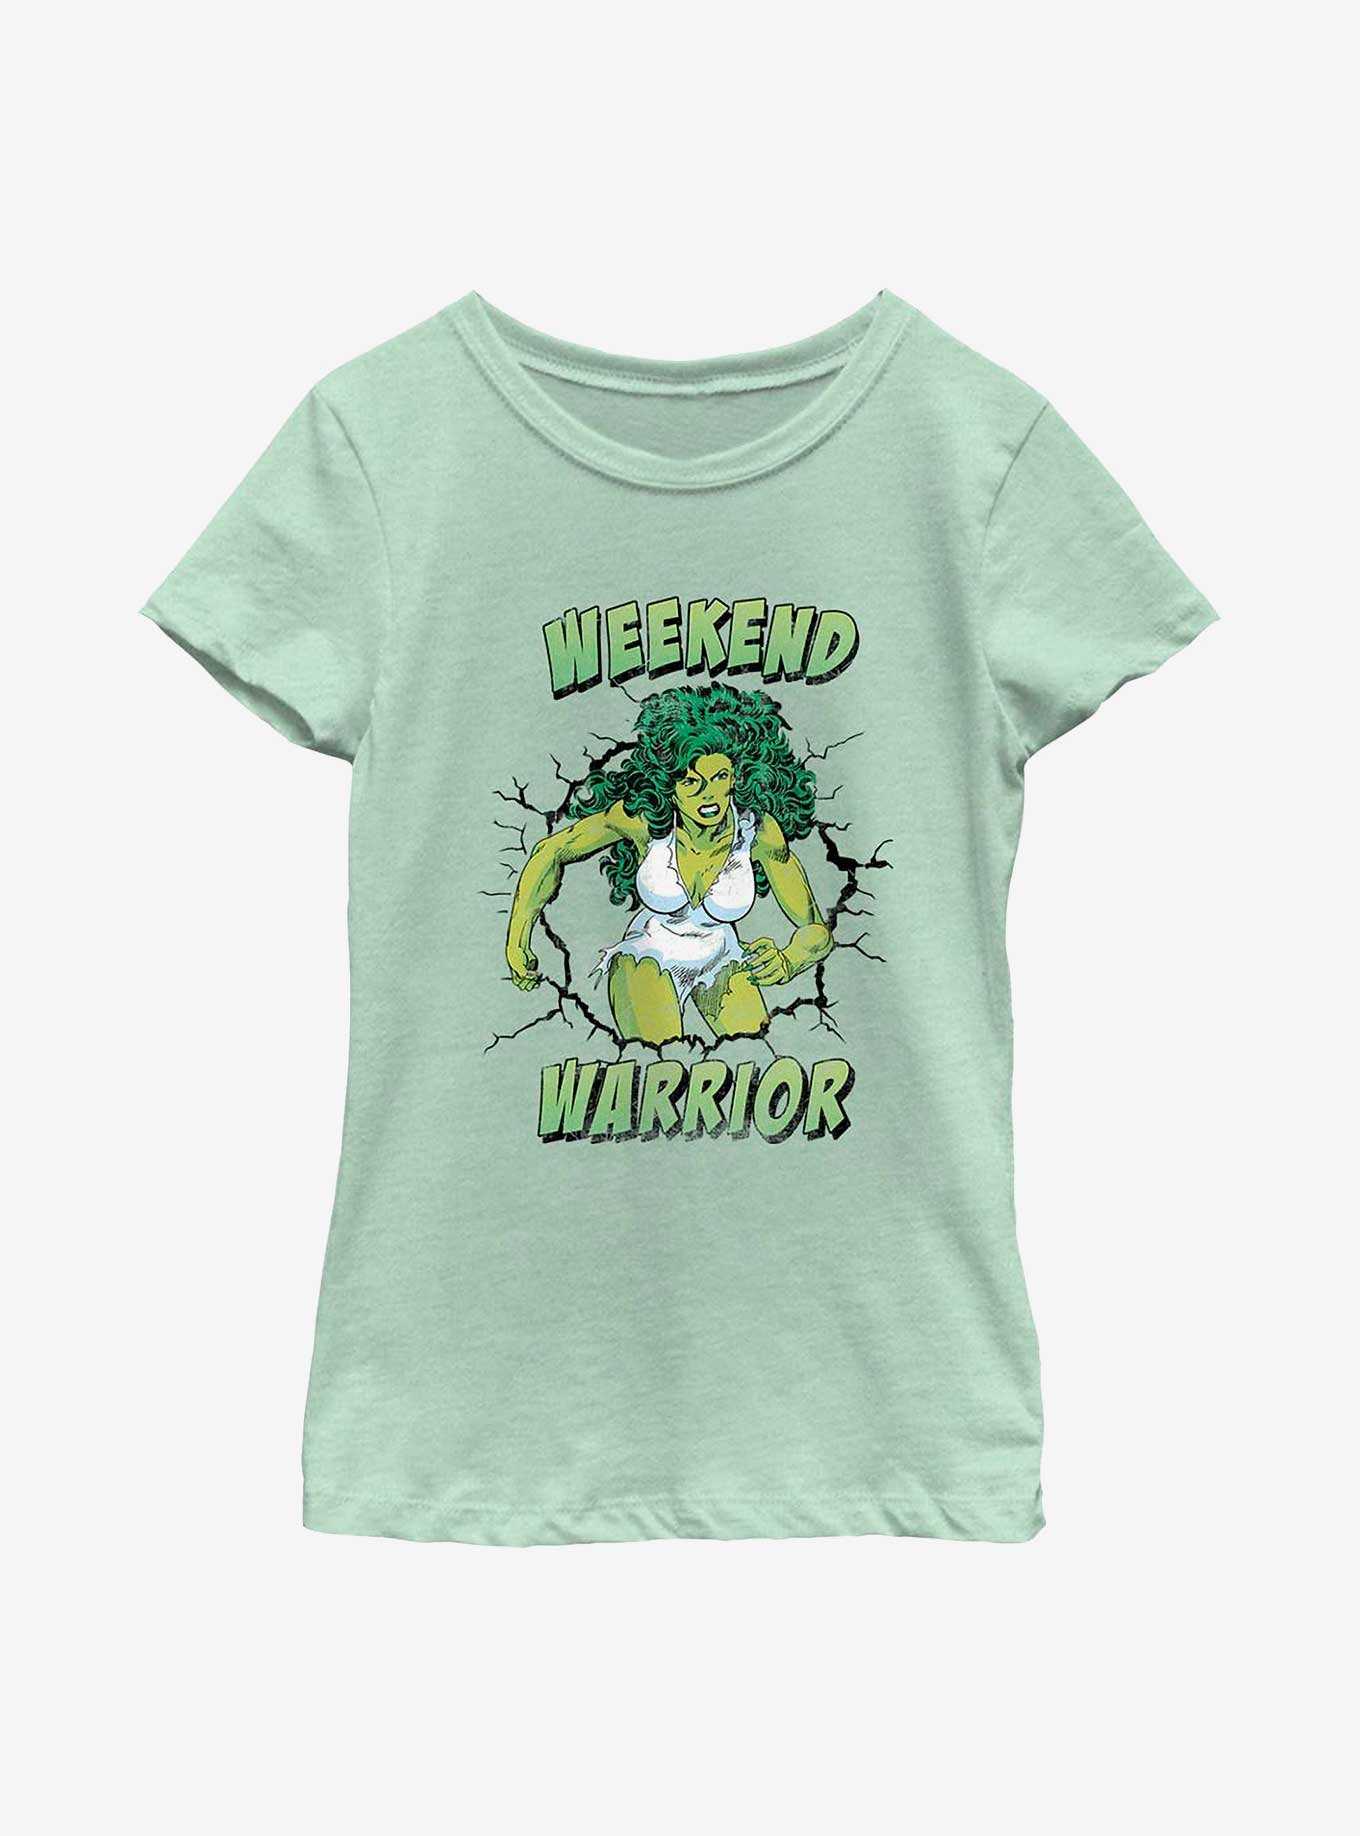 Marvel She-Hulk Weekend Warrior Youth Girls T-Shirt, , hi-res